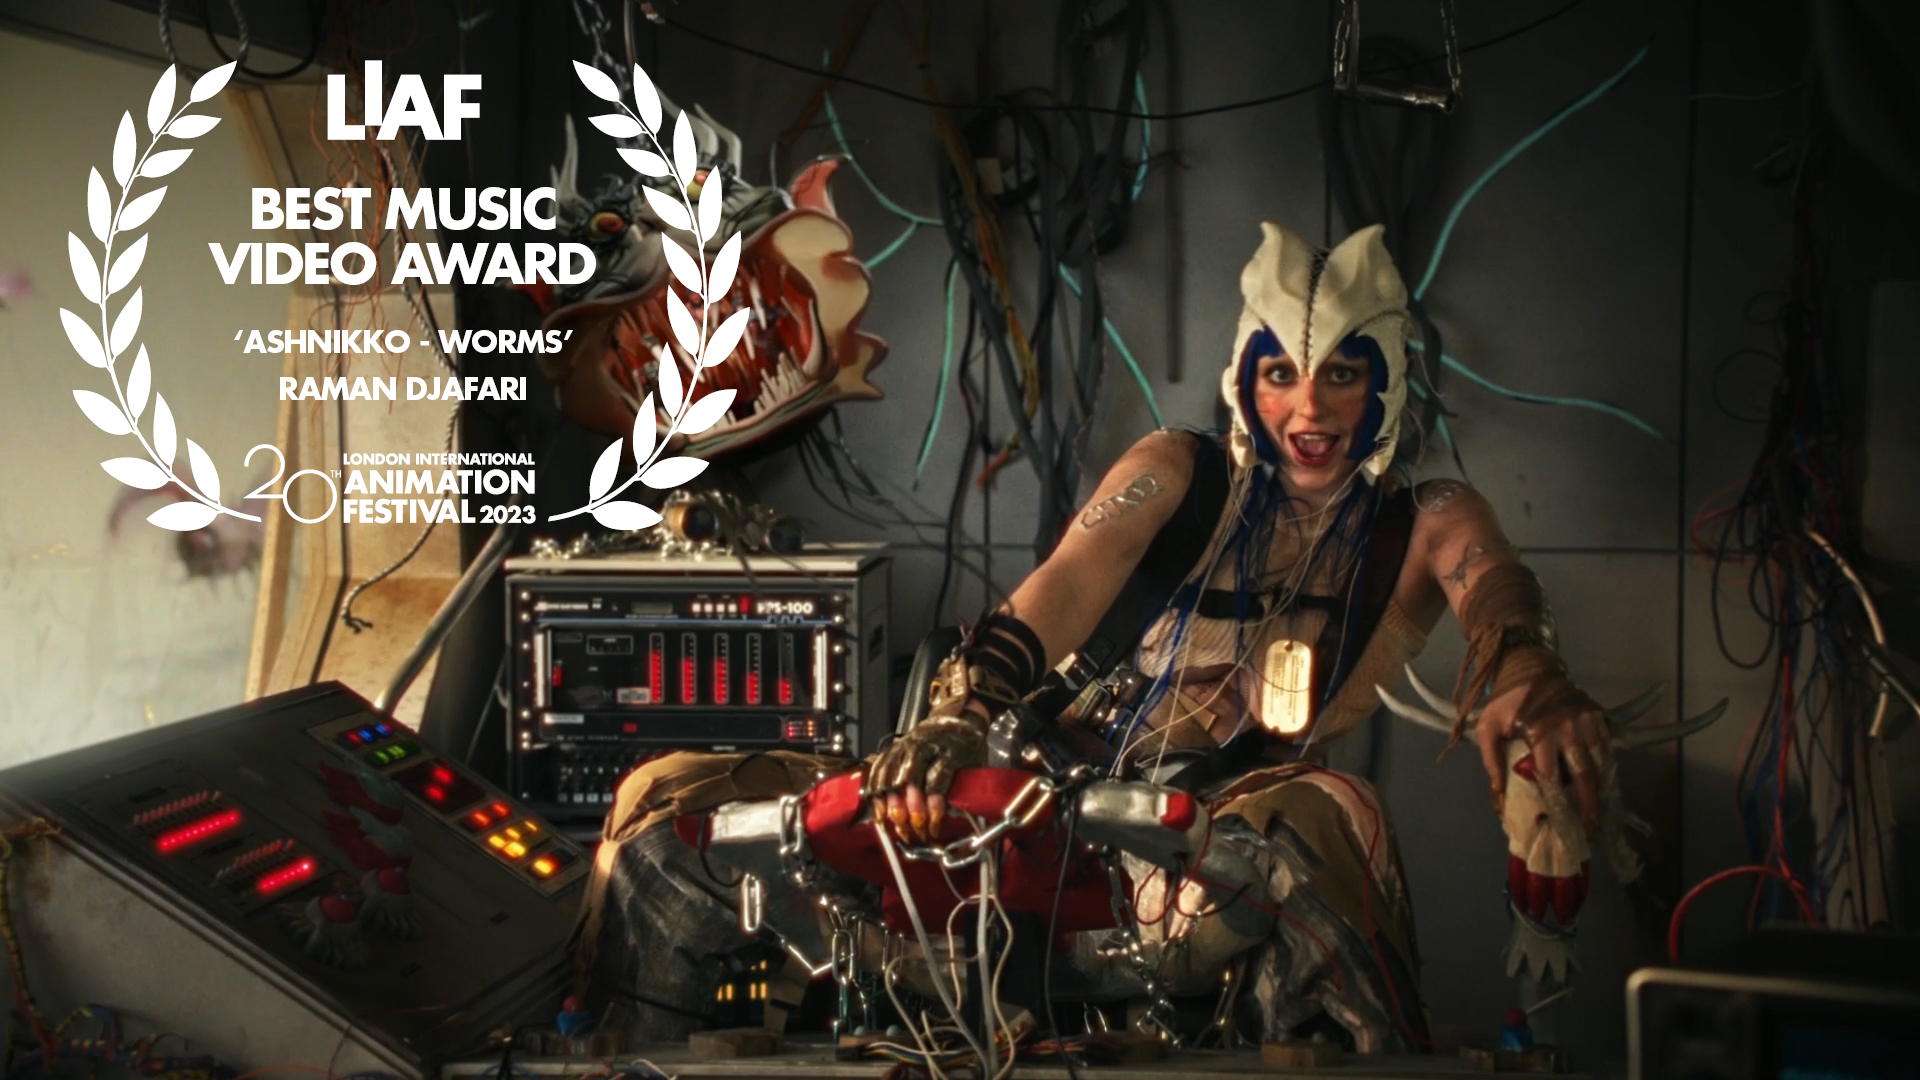 LIAF, London International Animation Festival, Best Music Video Award, Ashnikko - Worms, Raman Djafari